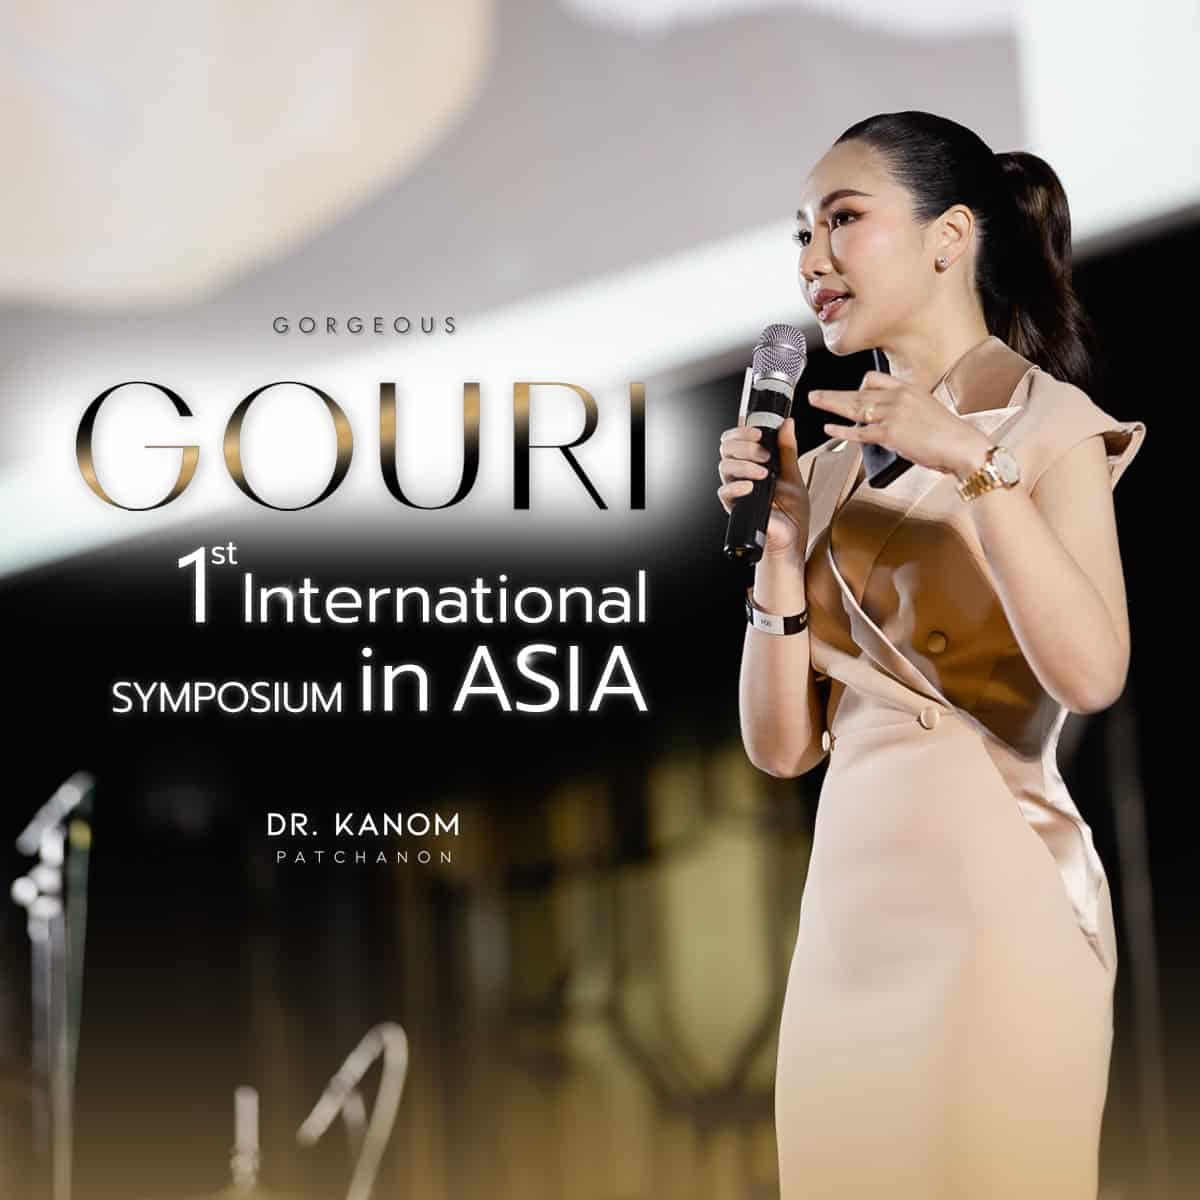 1st International Symposium in Asia